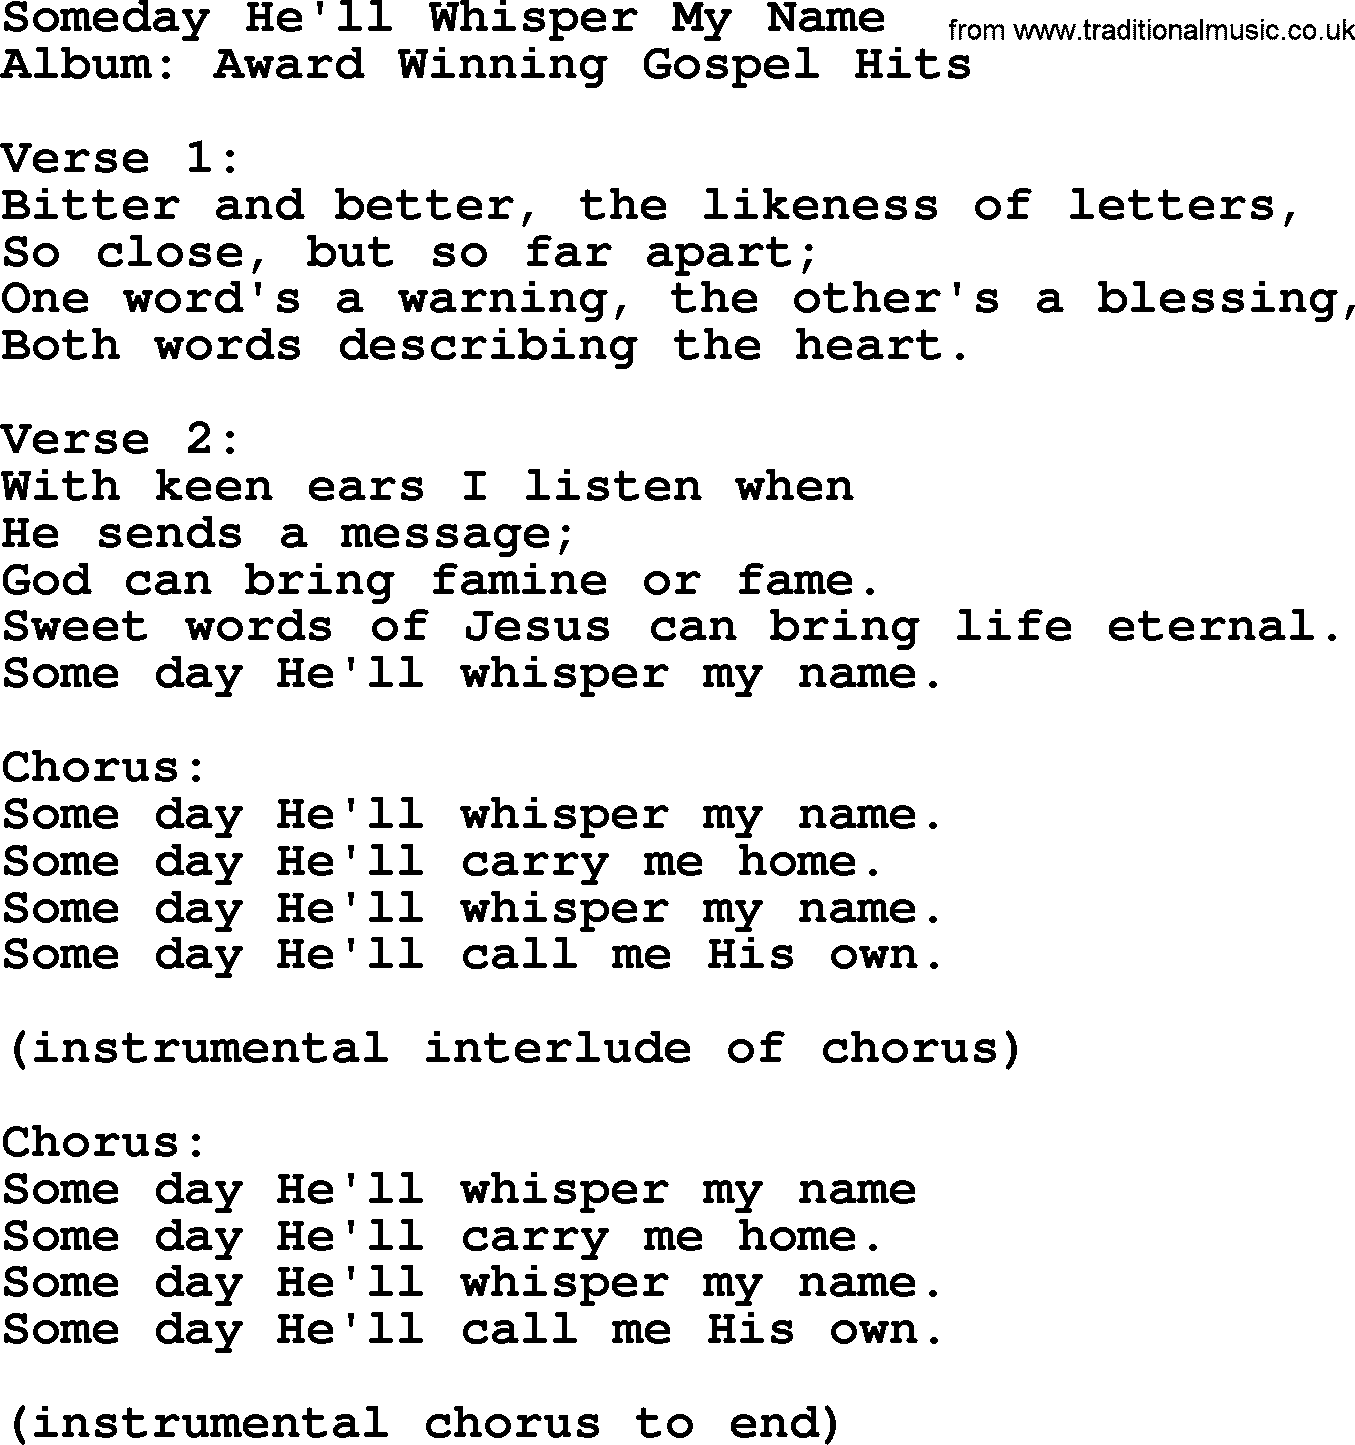 Merle Haggard song: Someday He'll Whisper My Name, lyrics.